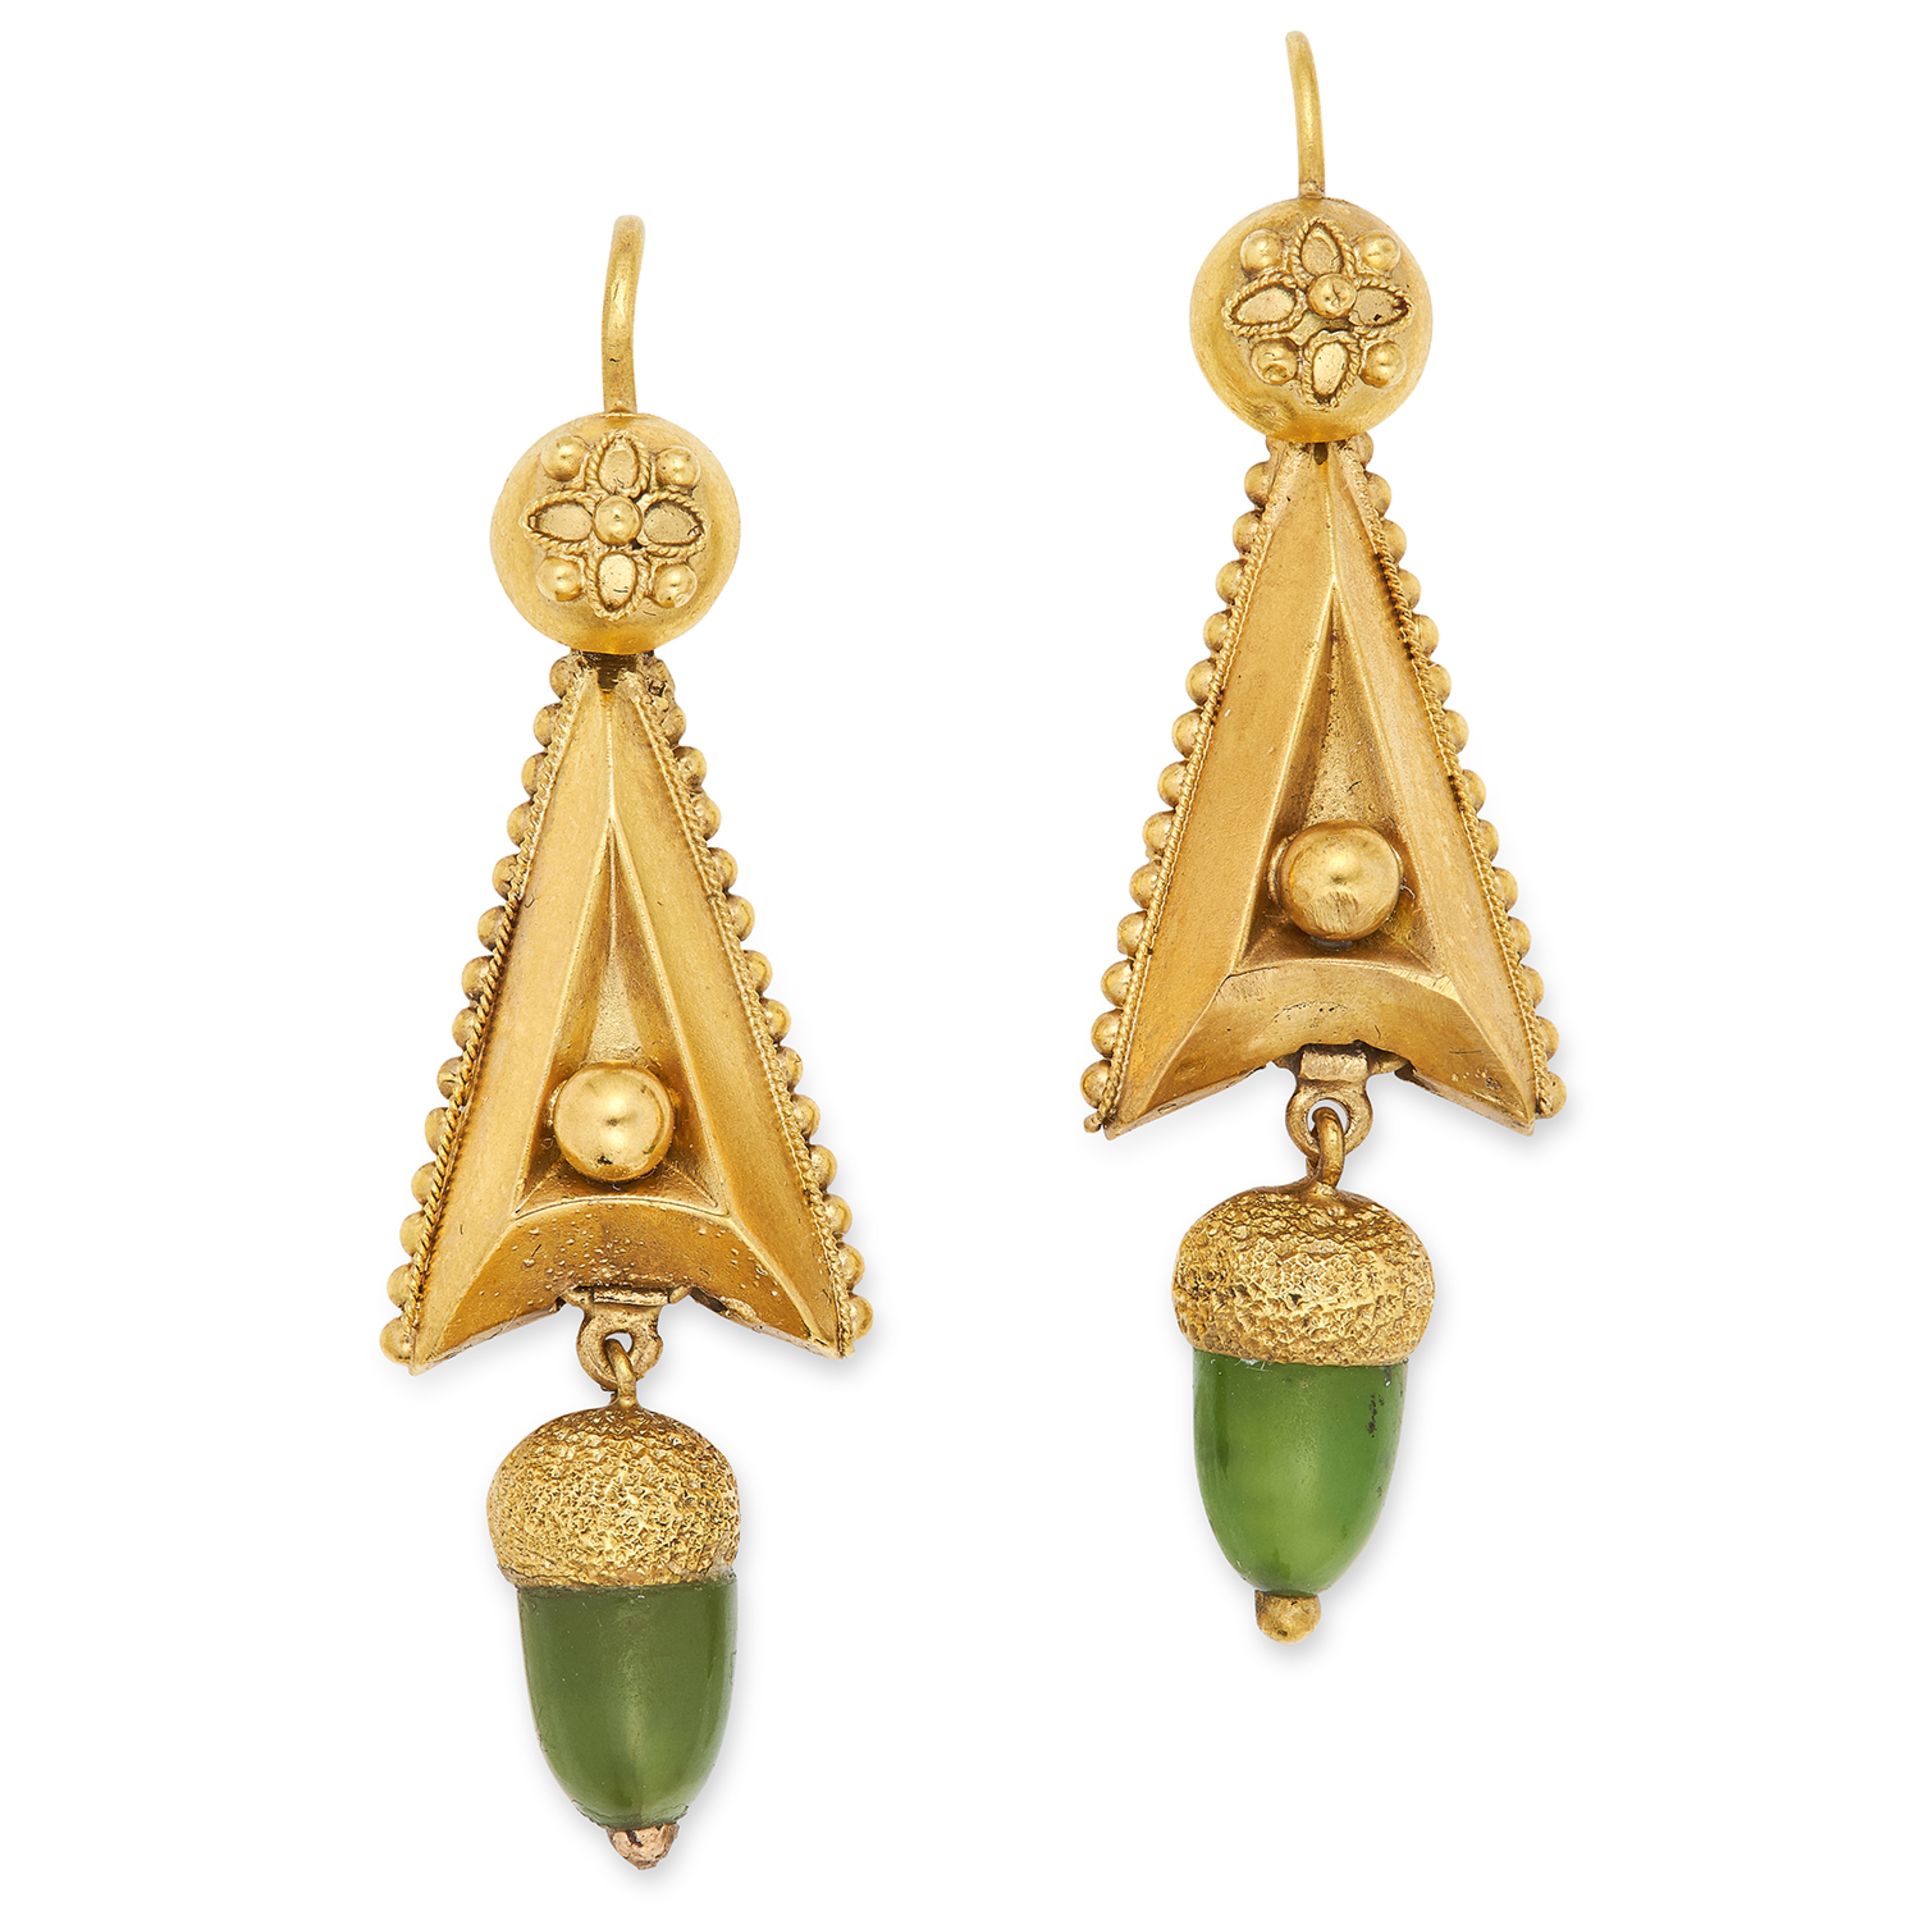 ANTIQUE JADE ACORN EARRINGS with triangle motifs suspending jade acorns, 4.7cm, 5.3g.